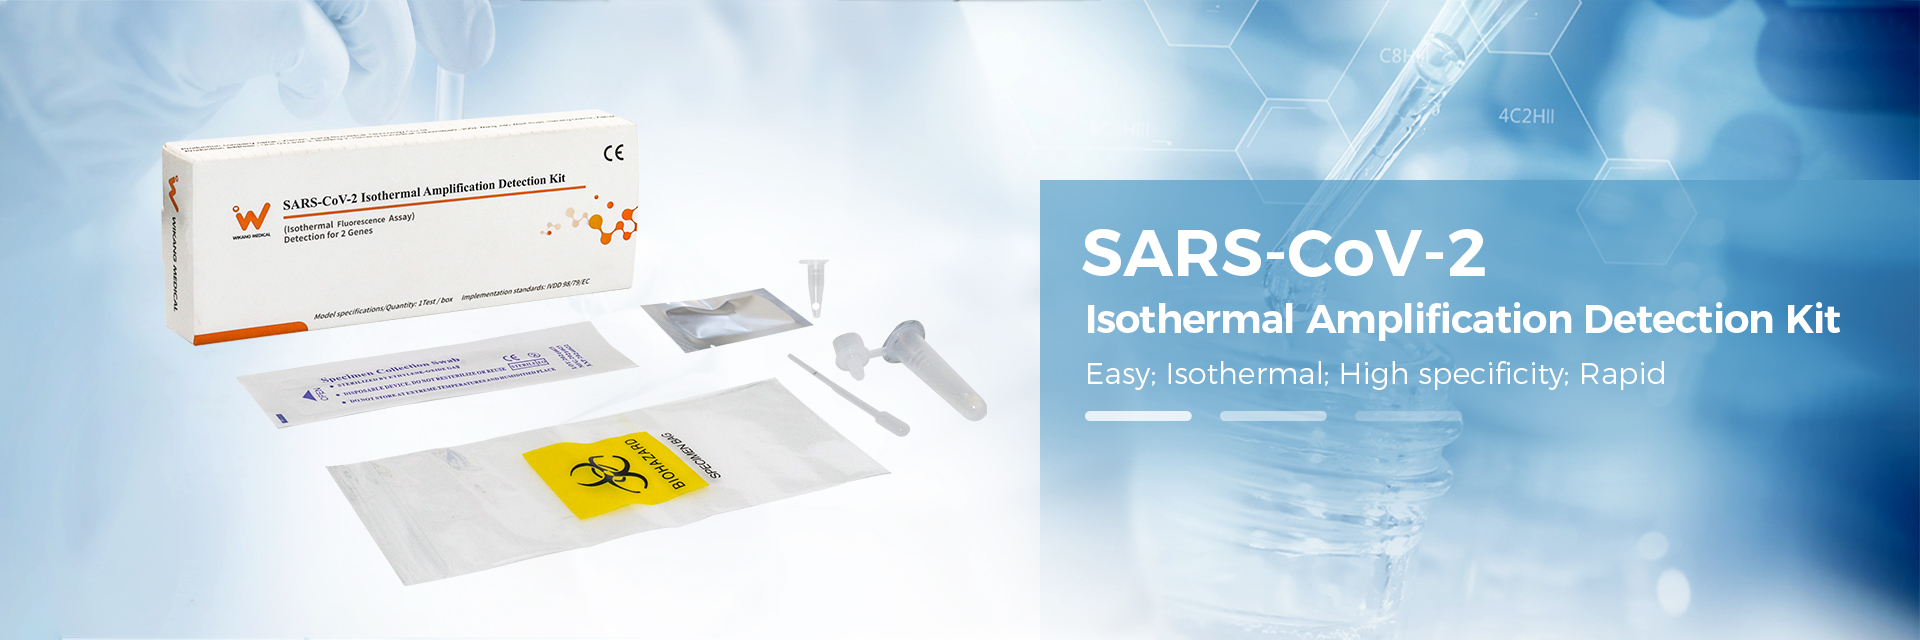 SARS-CoV-2 Isothermal ایمپلیفیکیشن ڈیٹیکشن کٹ